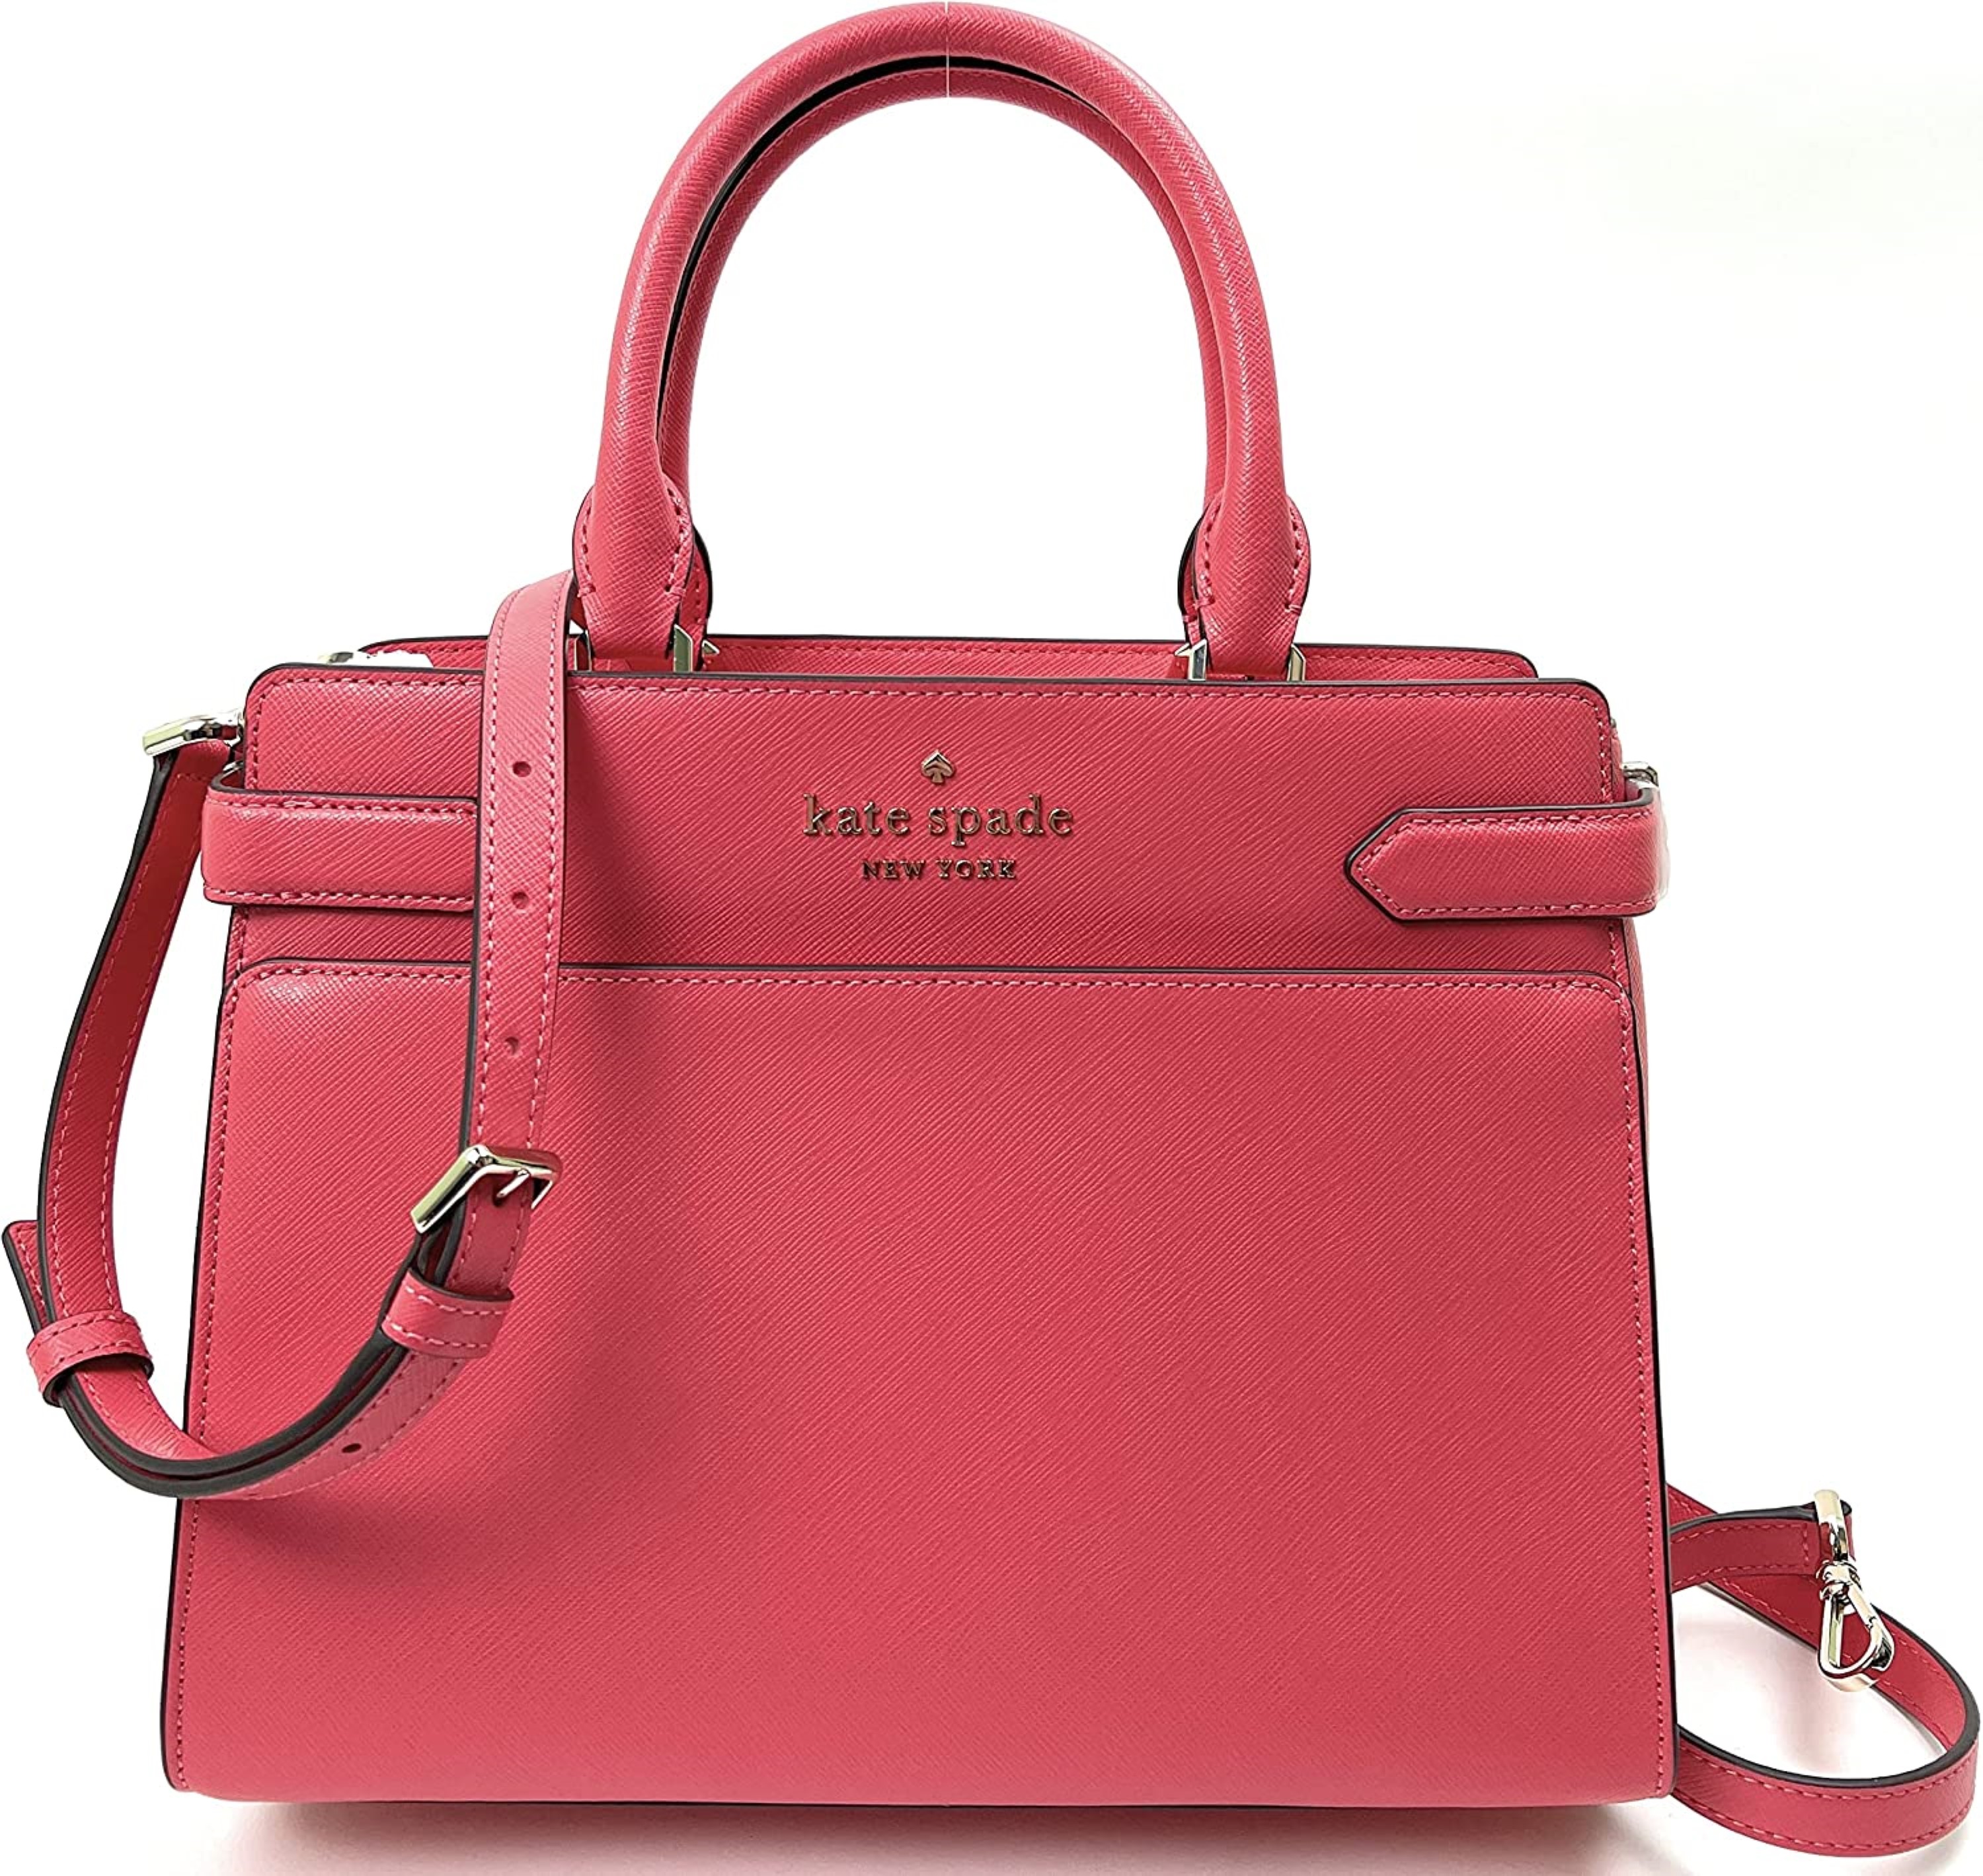 Staci Medium Saffiano Leather Satchel Purse Pink | Wholesale | Tradeling